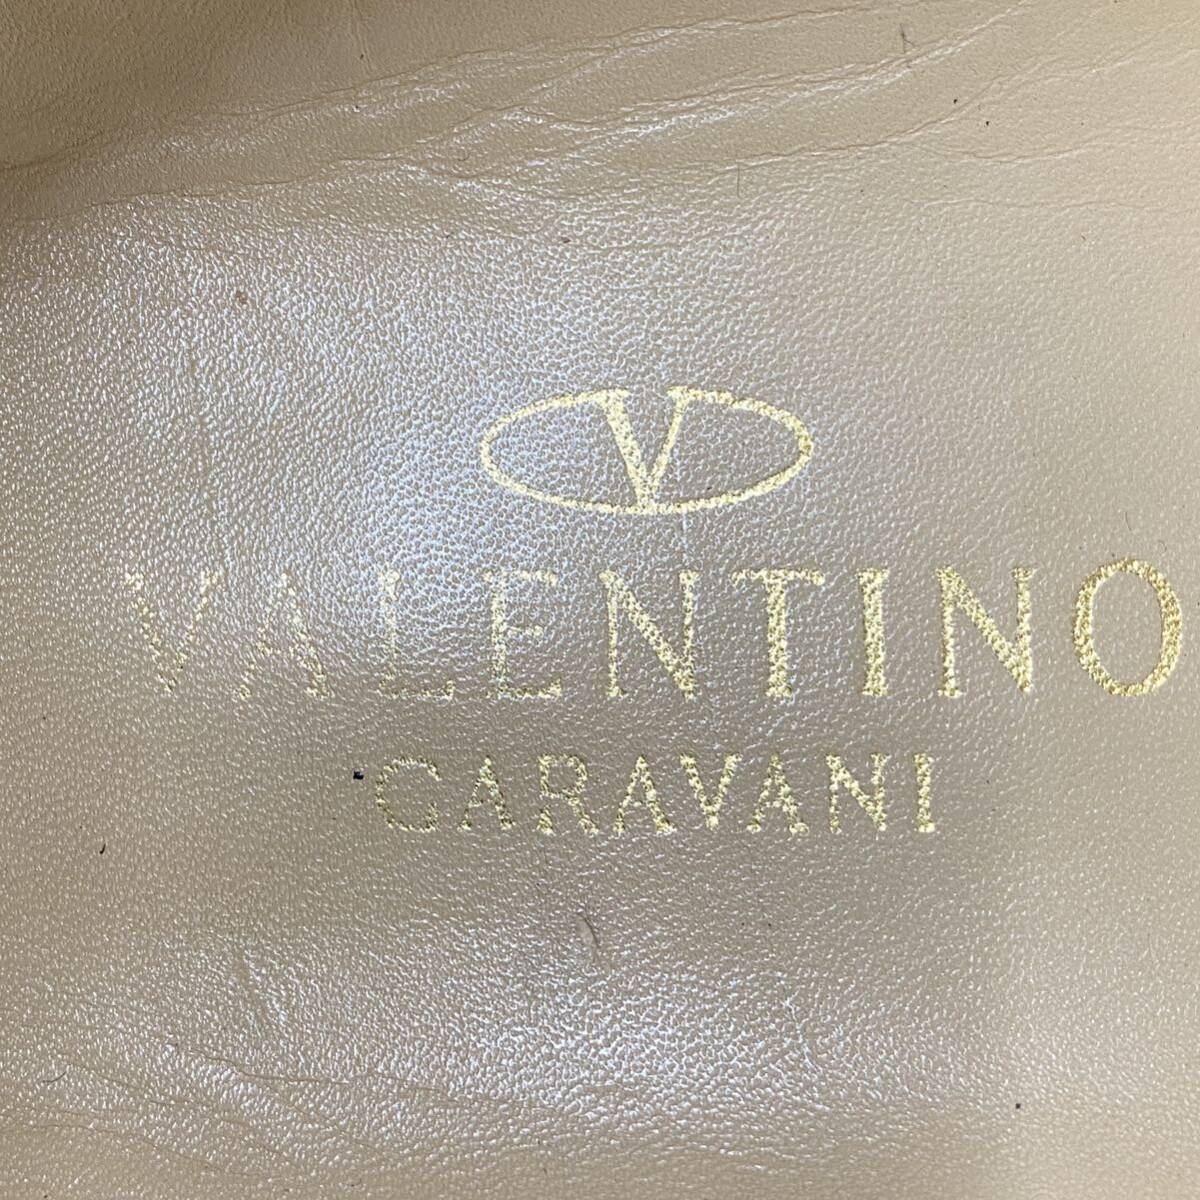 Bd22 VALENTINO GARAVANI ヴァレンティノ ガラヴァーニ コインローファー レザーシューズ 41（26cm相当）ベージュ メンズ 紳士の画像6